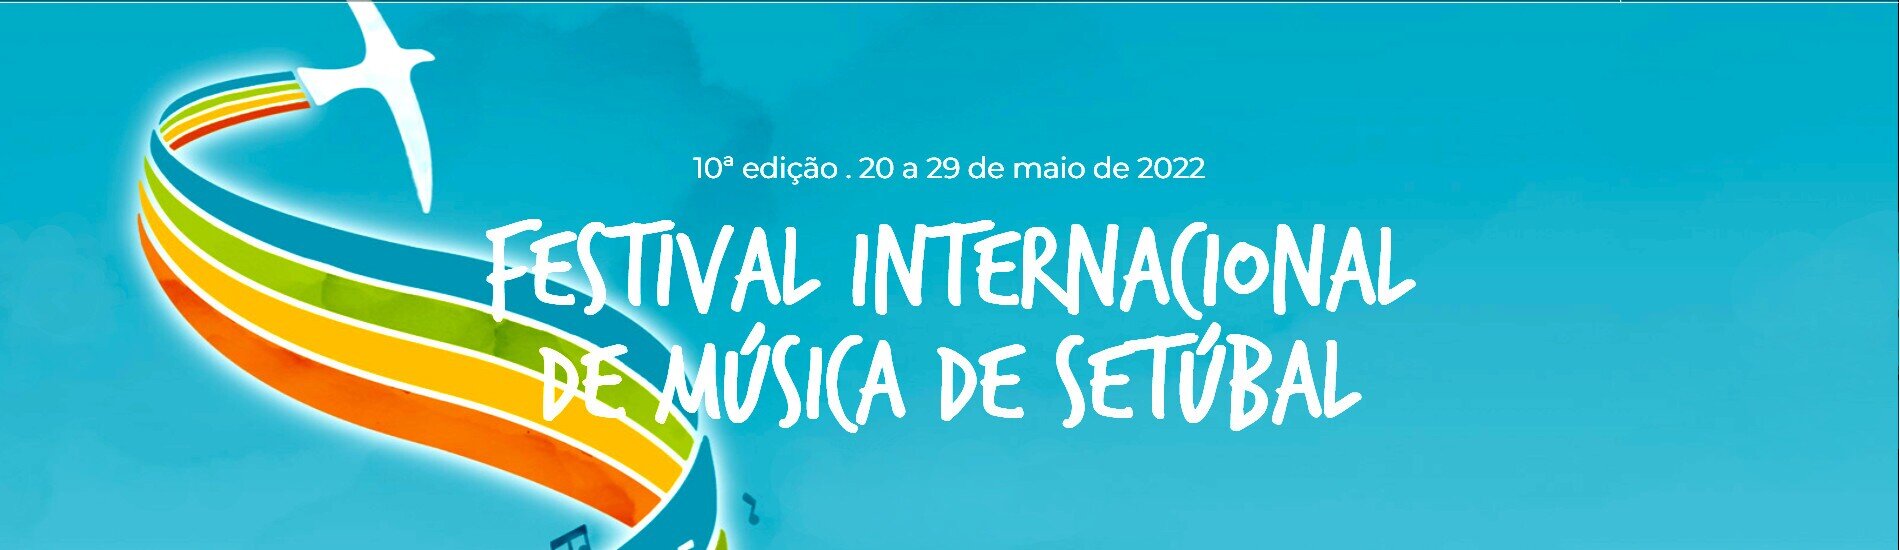 festivalintmusicasetubal_acontece